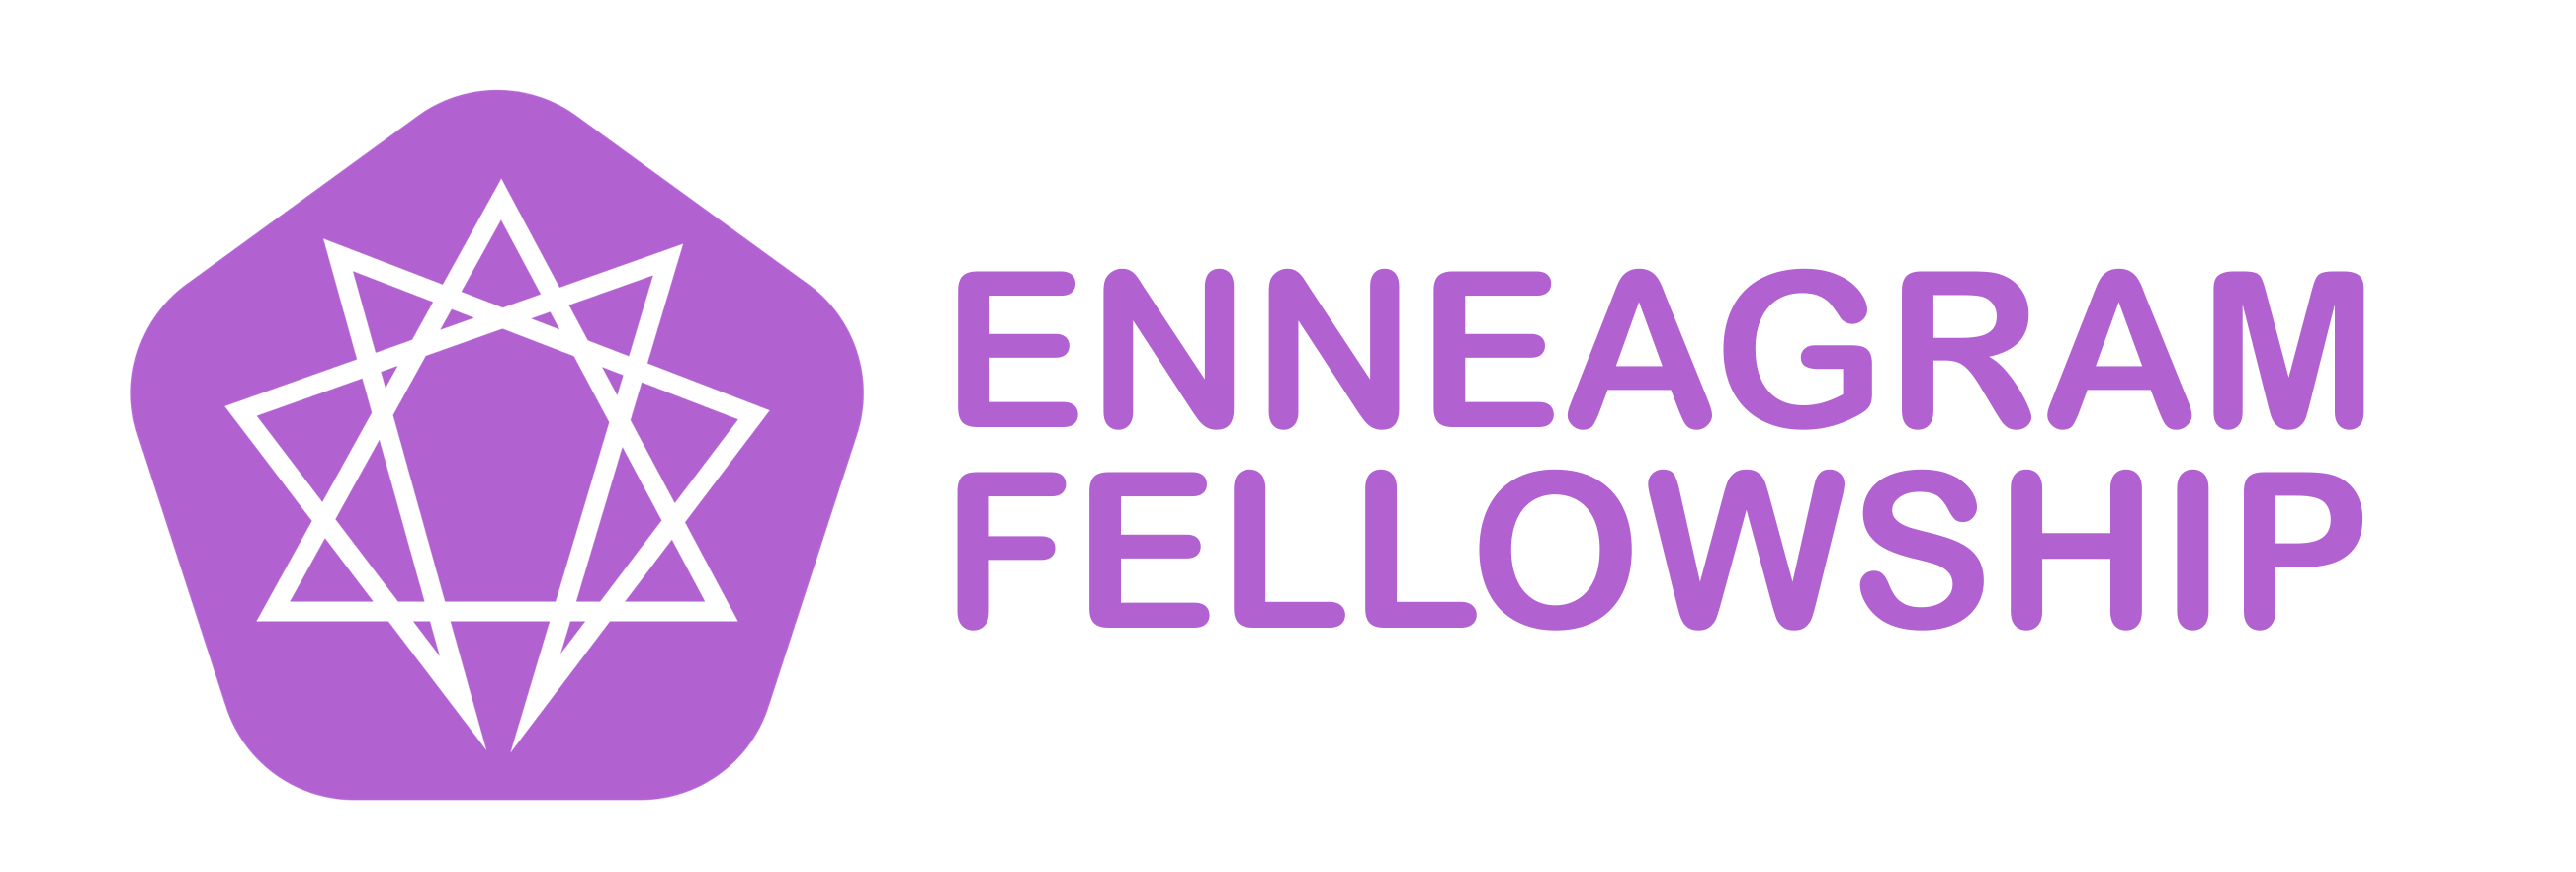 Enneagram Fellowship